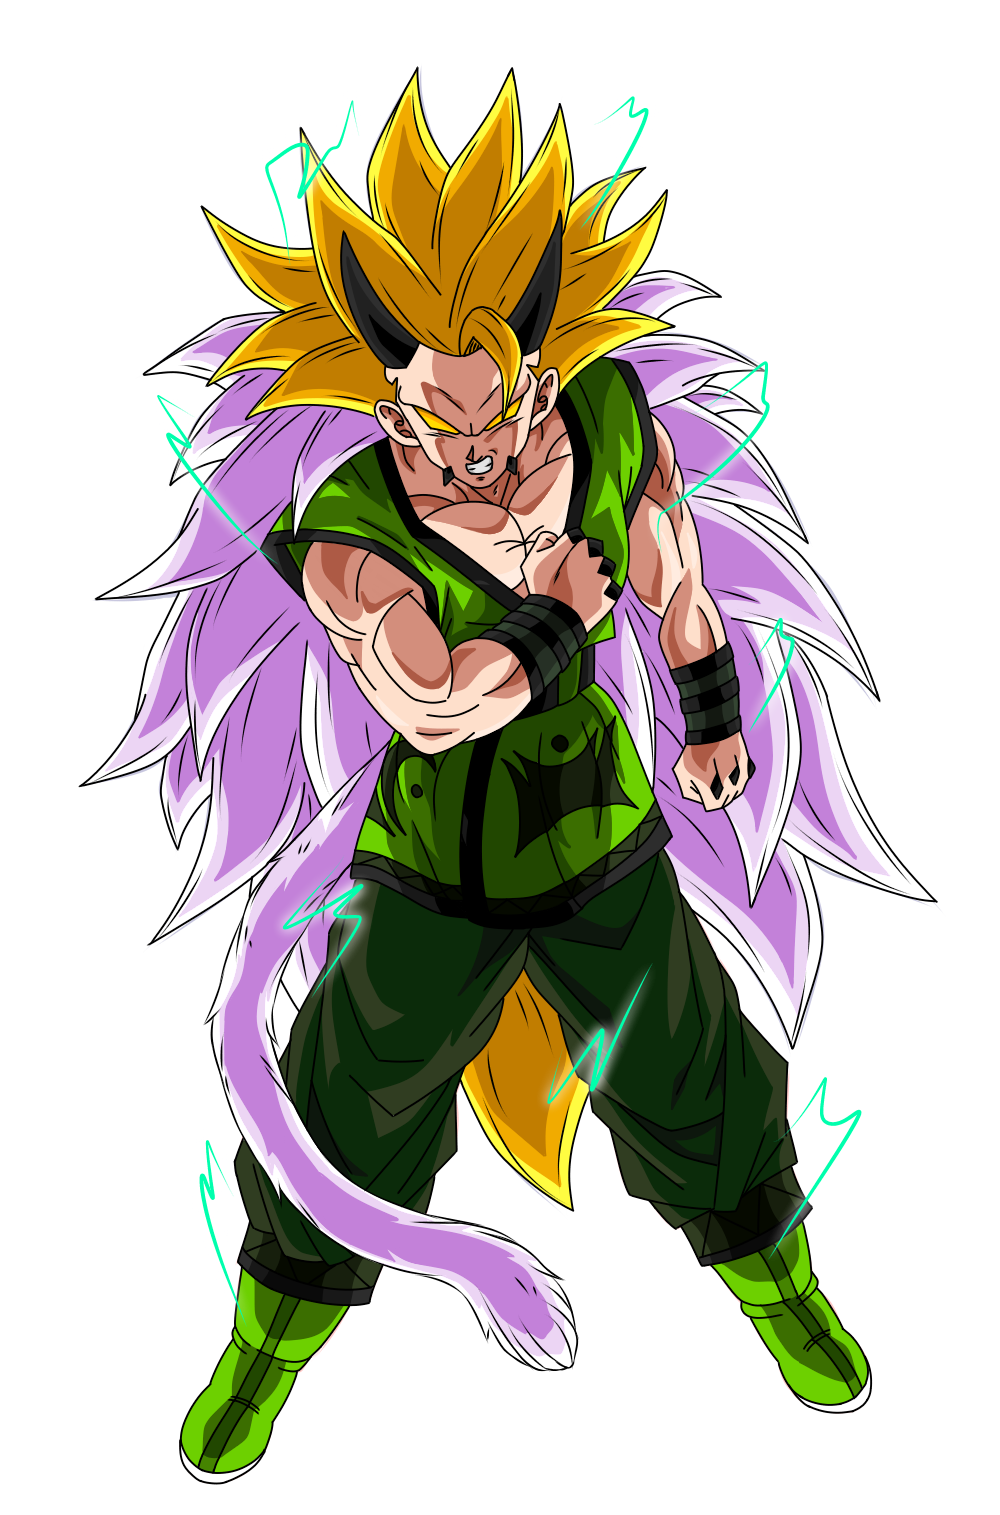 Goku Super Saiyan 9 full power. Dragon ball super art, Anime dragon ball, Goku super saiyan